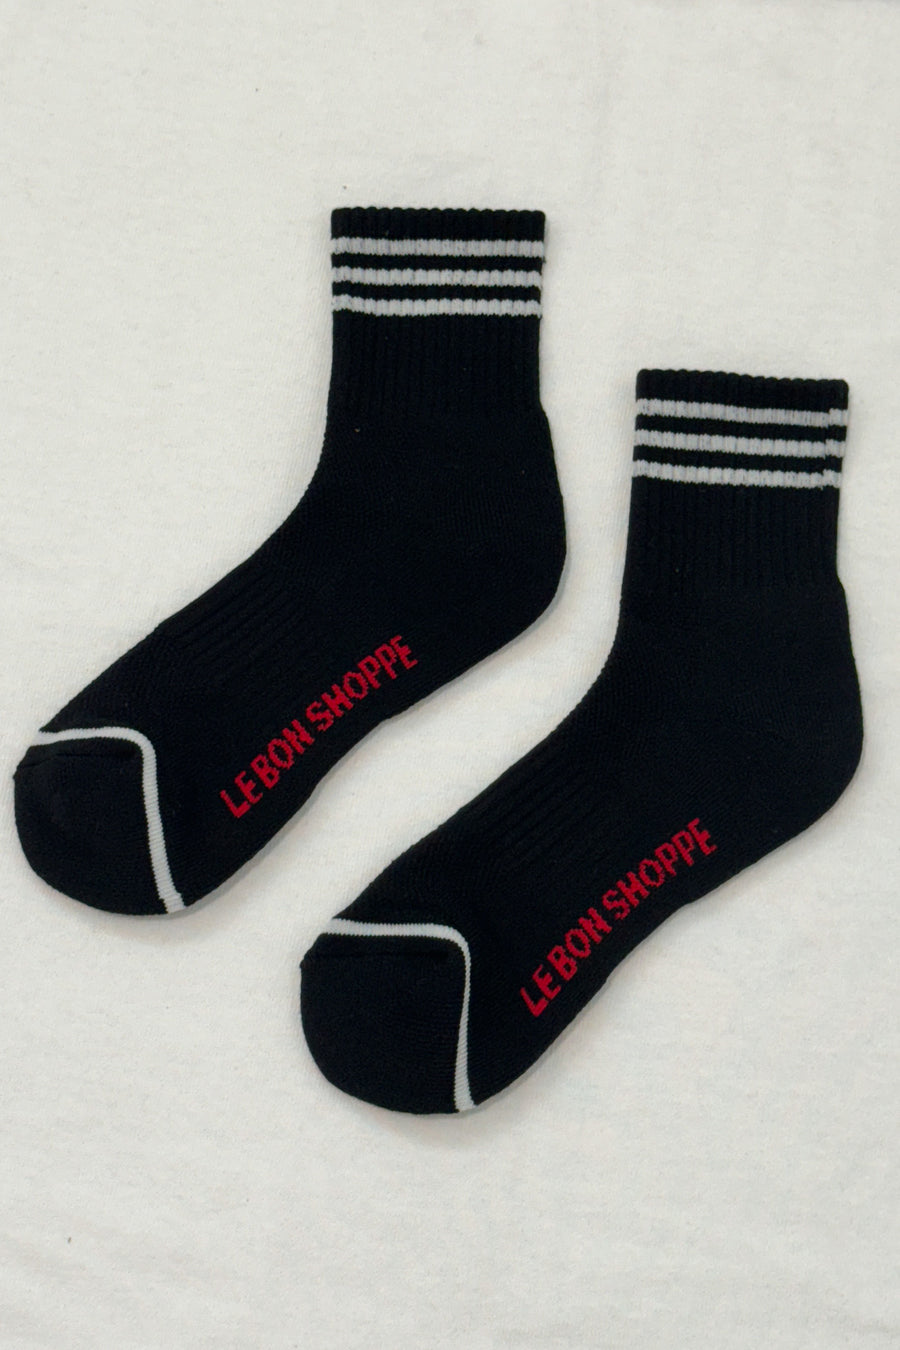 Girlfriend Socks in Black